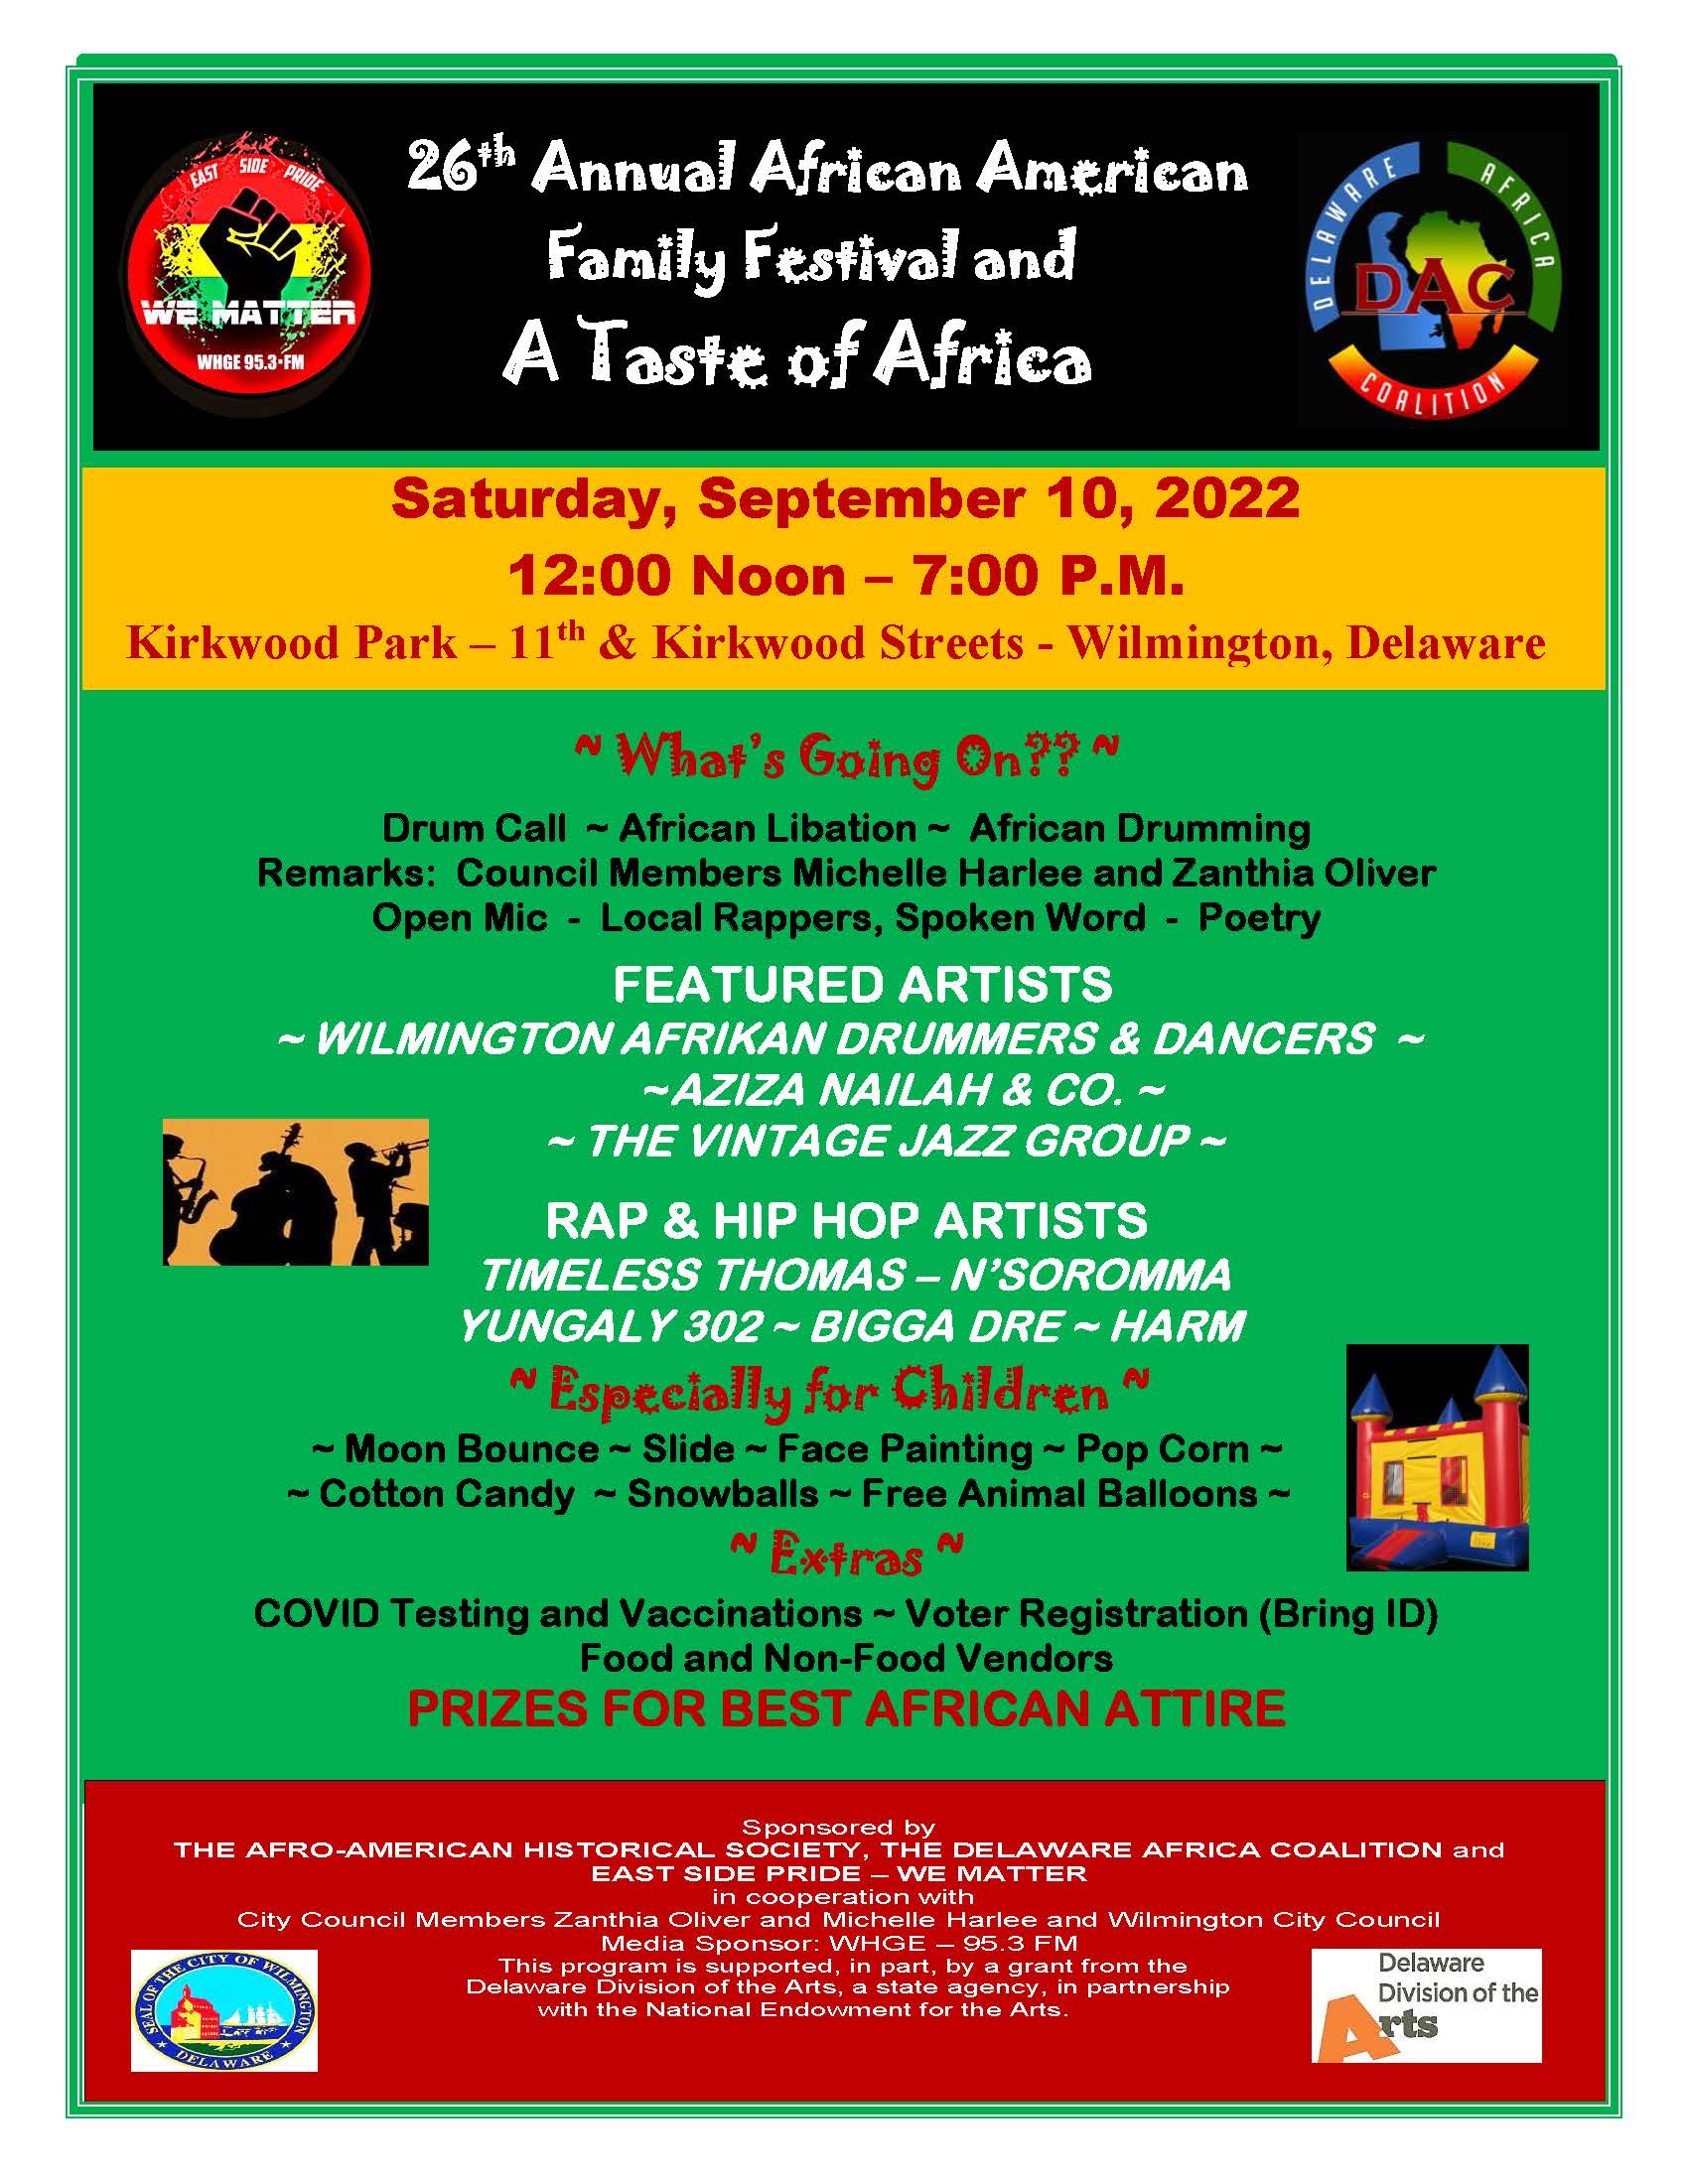 2022 African American Festival Flyer in word in pdf 8.17.2022 (1)